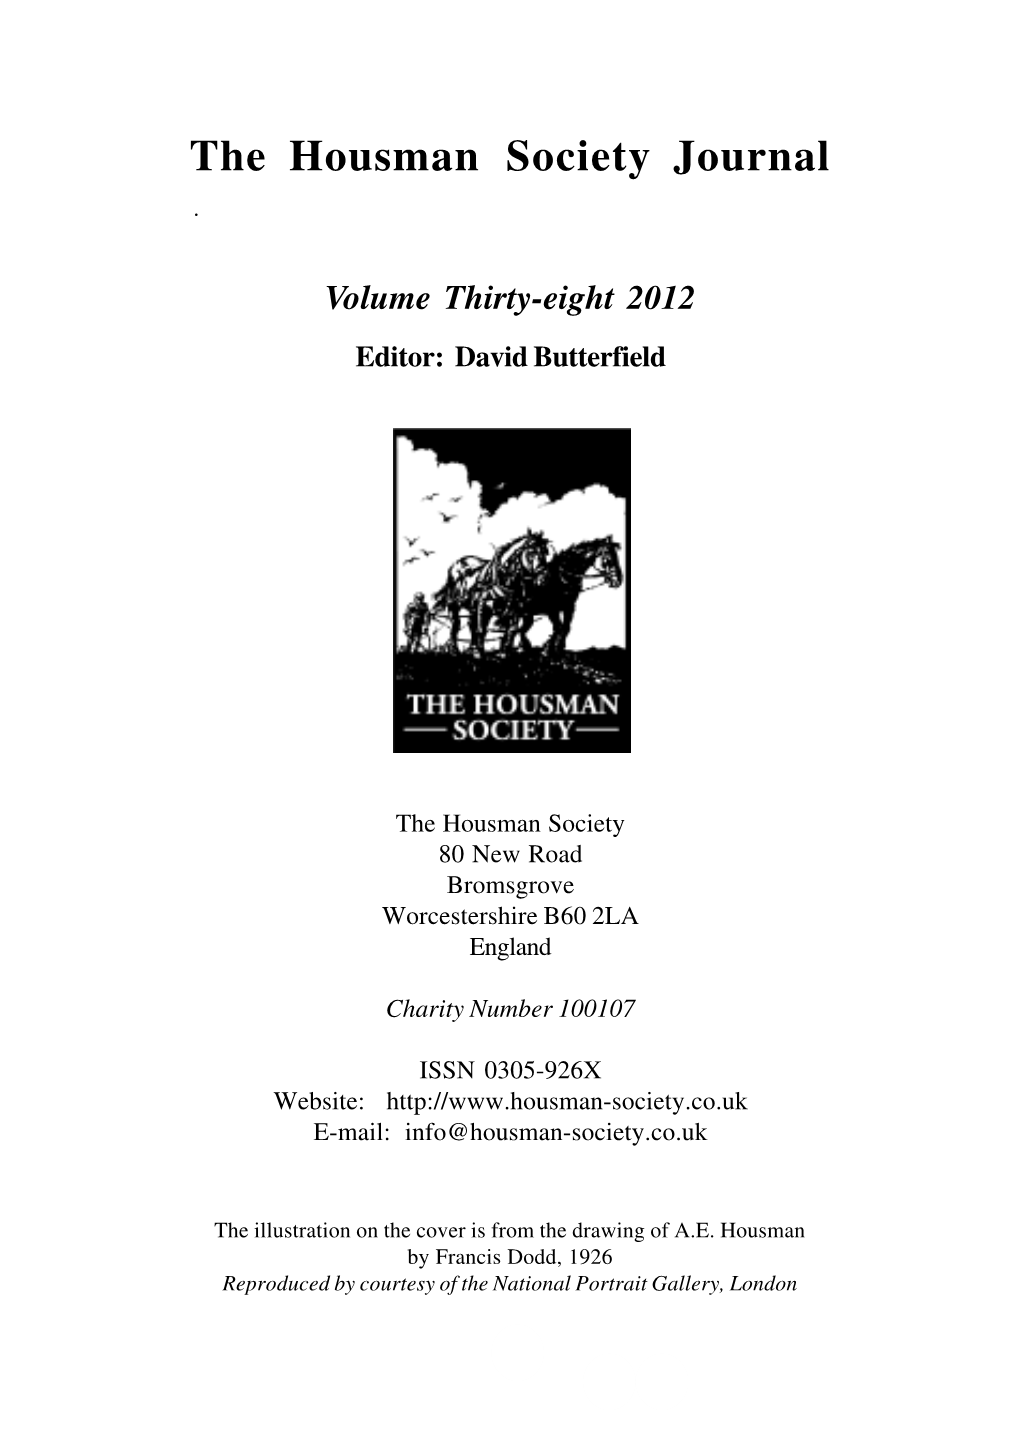 The Housman Society Journal Vol.38 (Dec 2012)